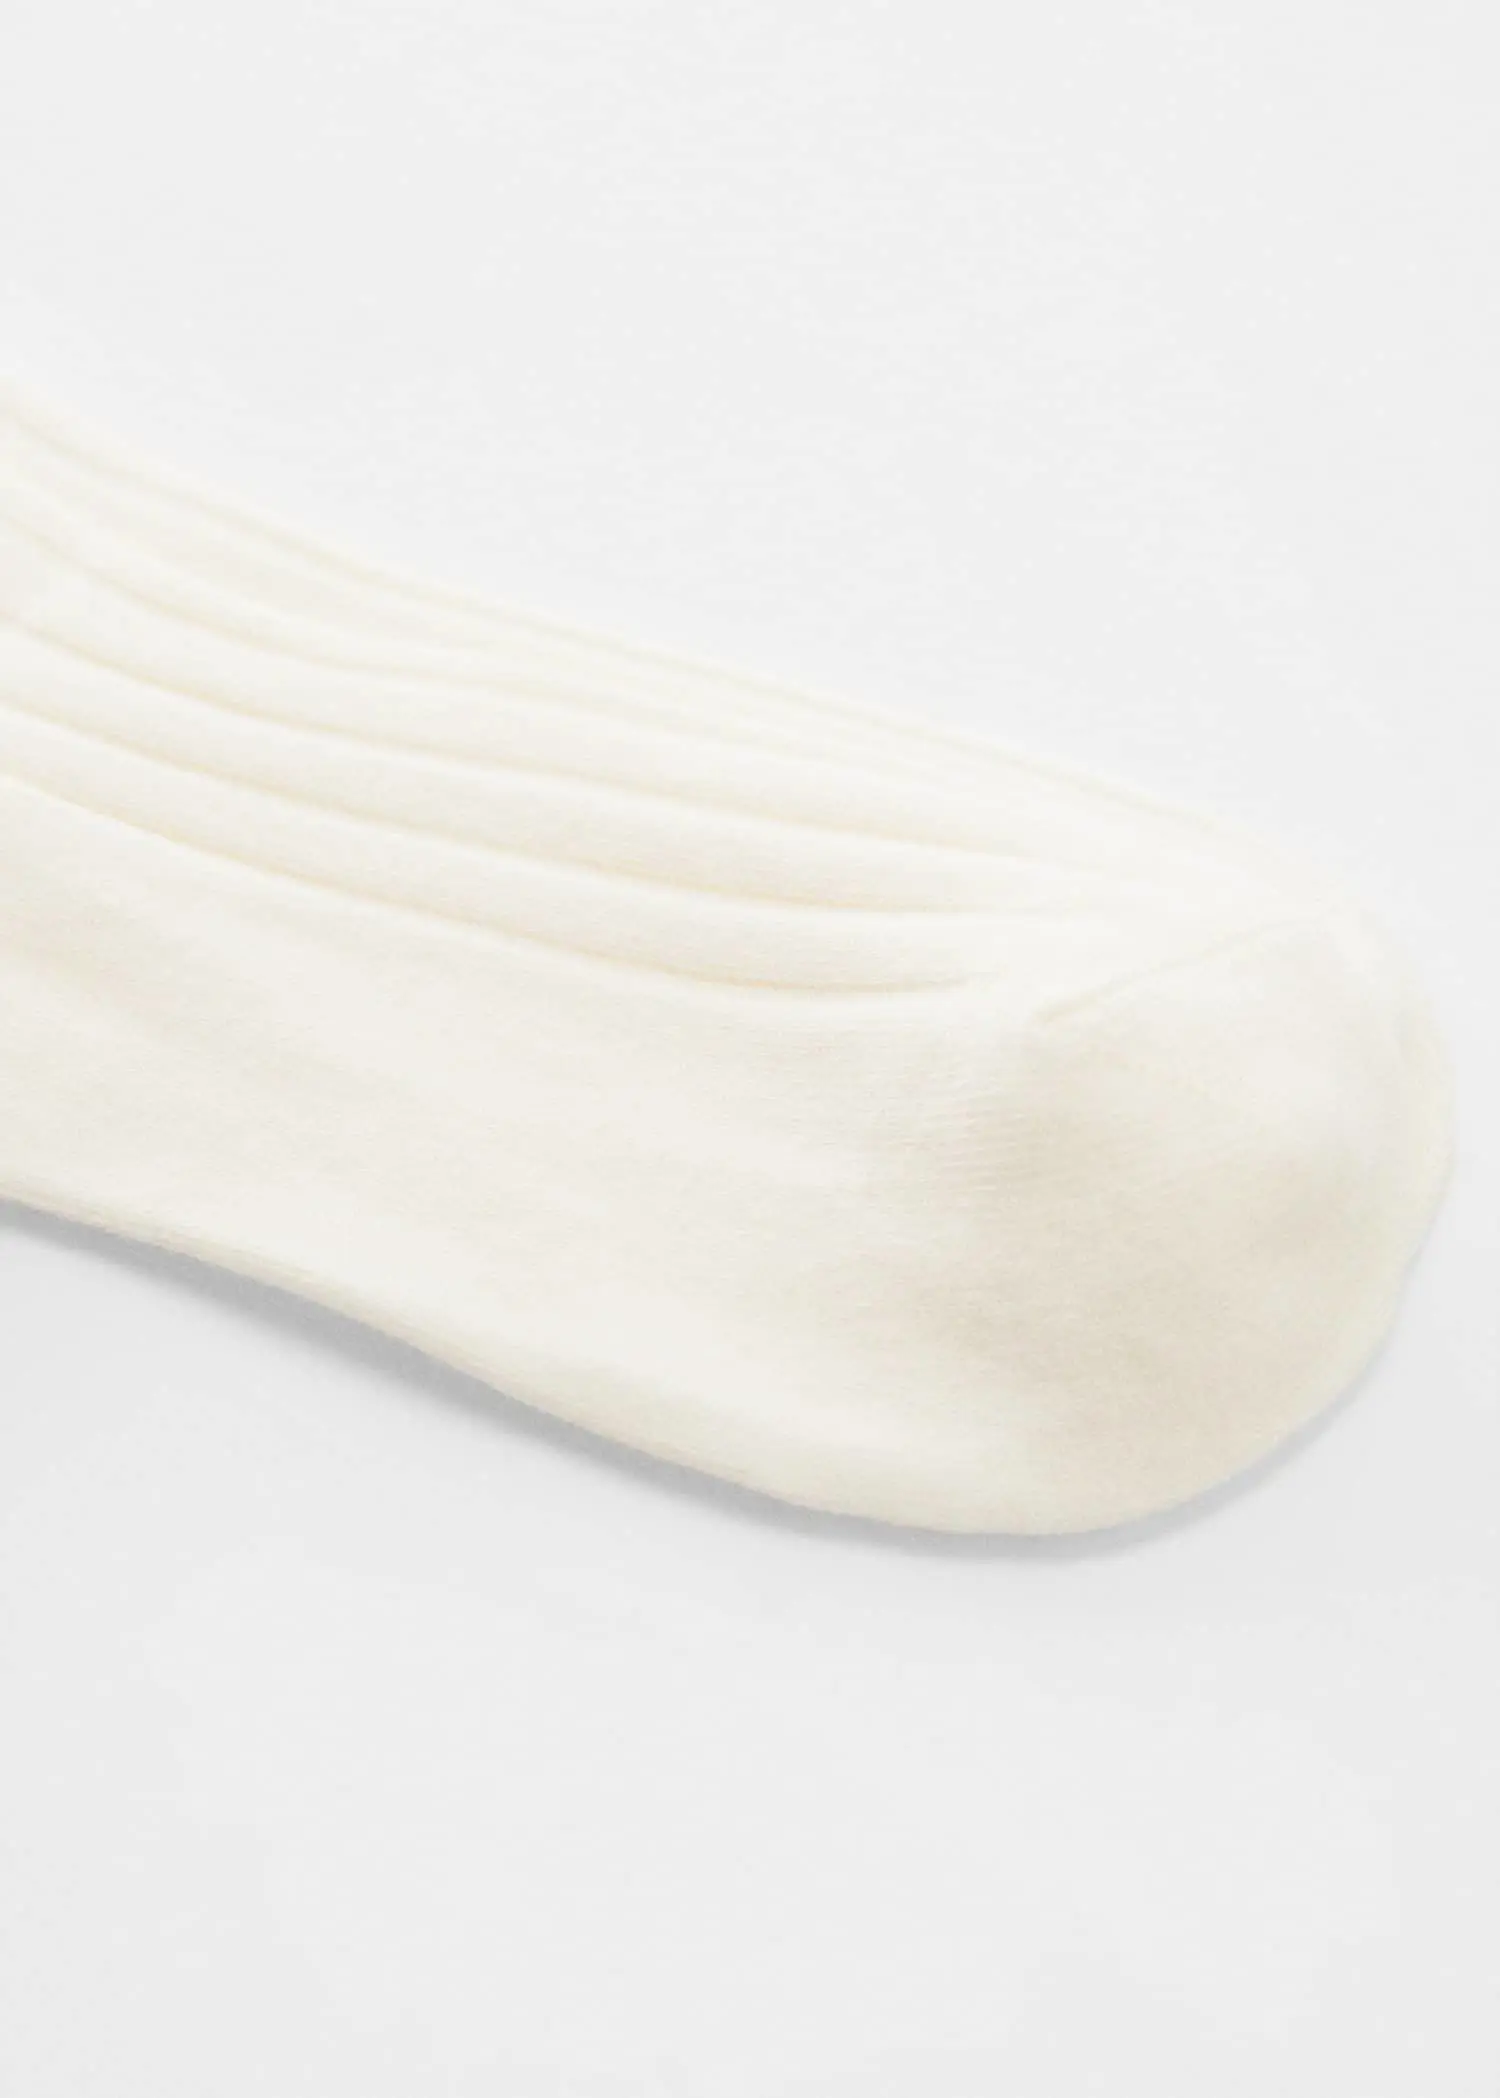 Mango Ribbed socks. 3